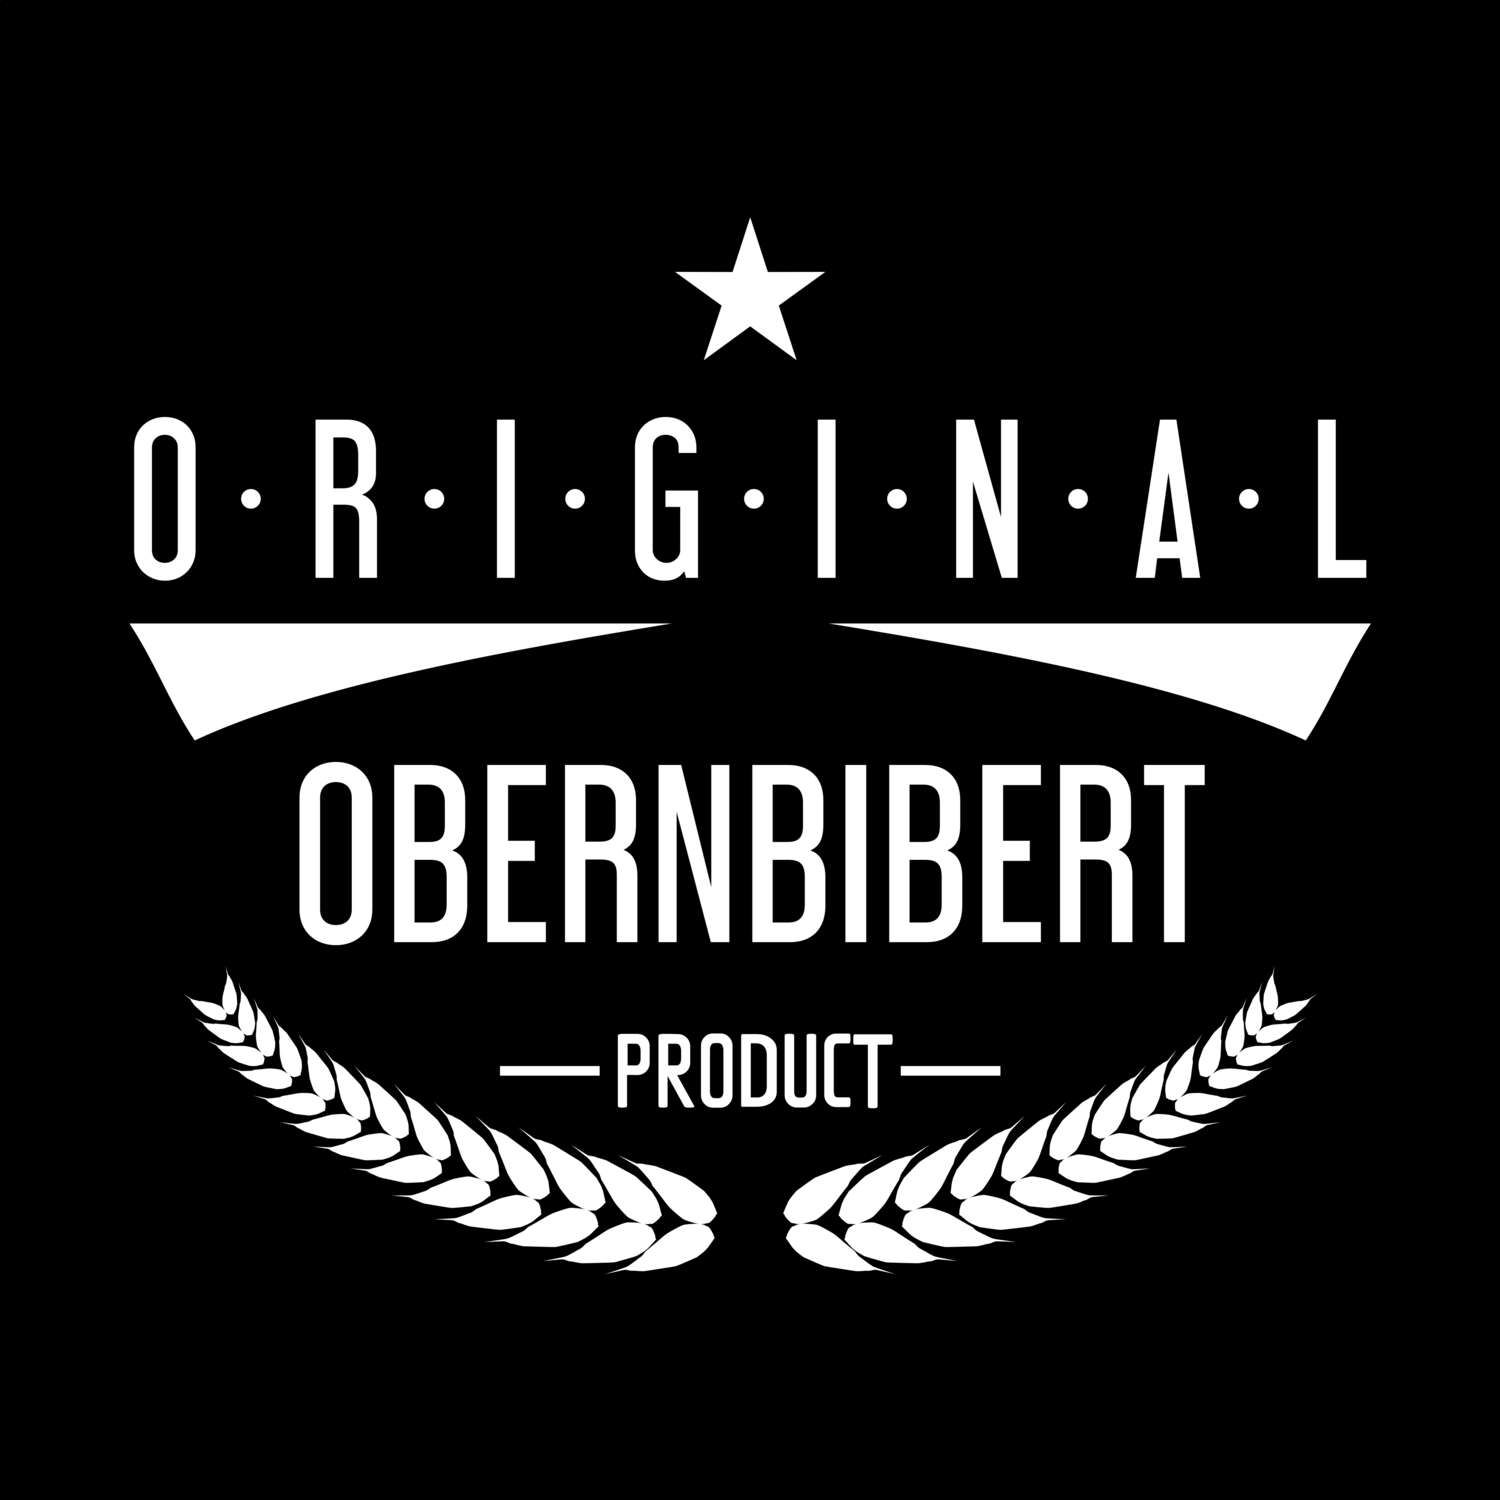 Obernbibert T-Shirt »Original Product«